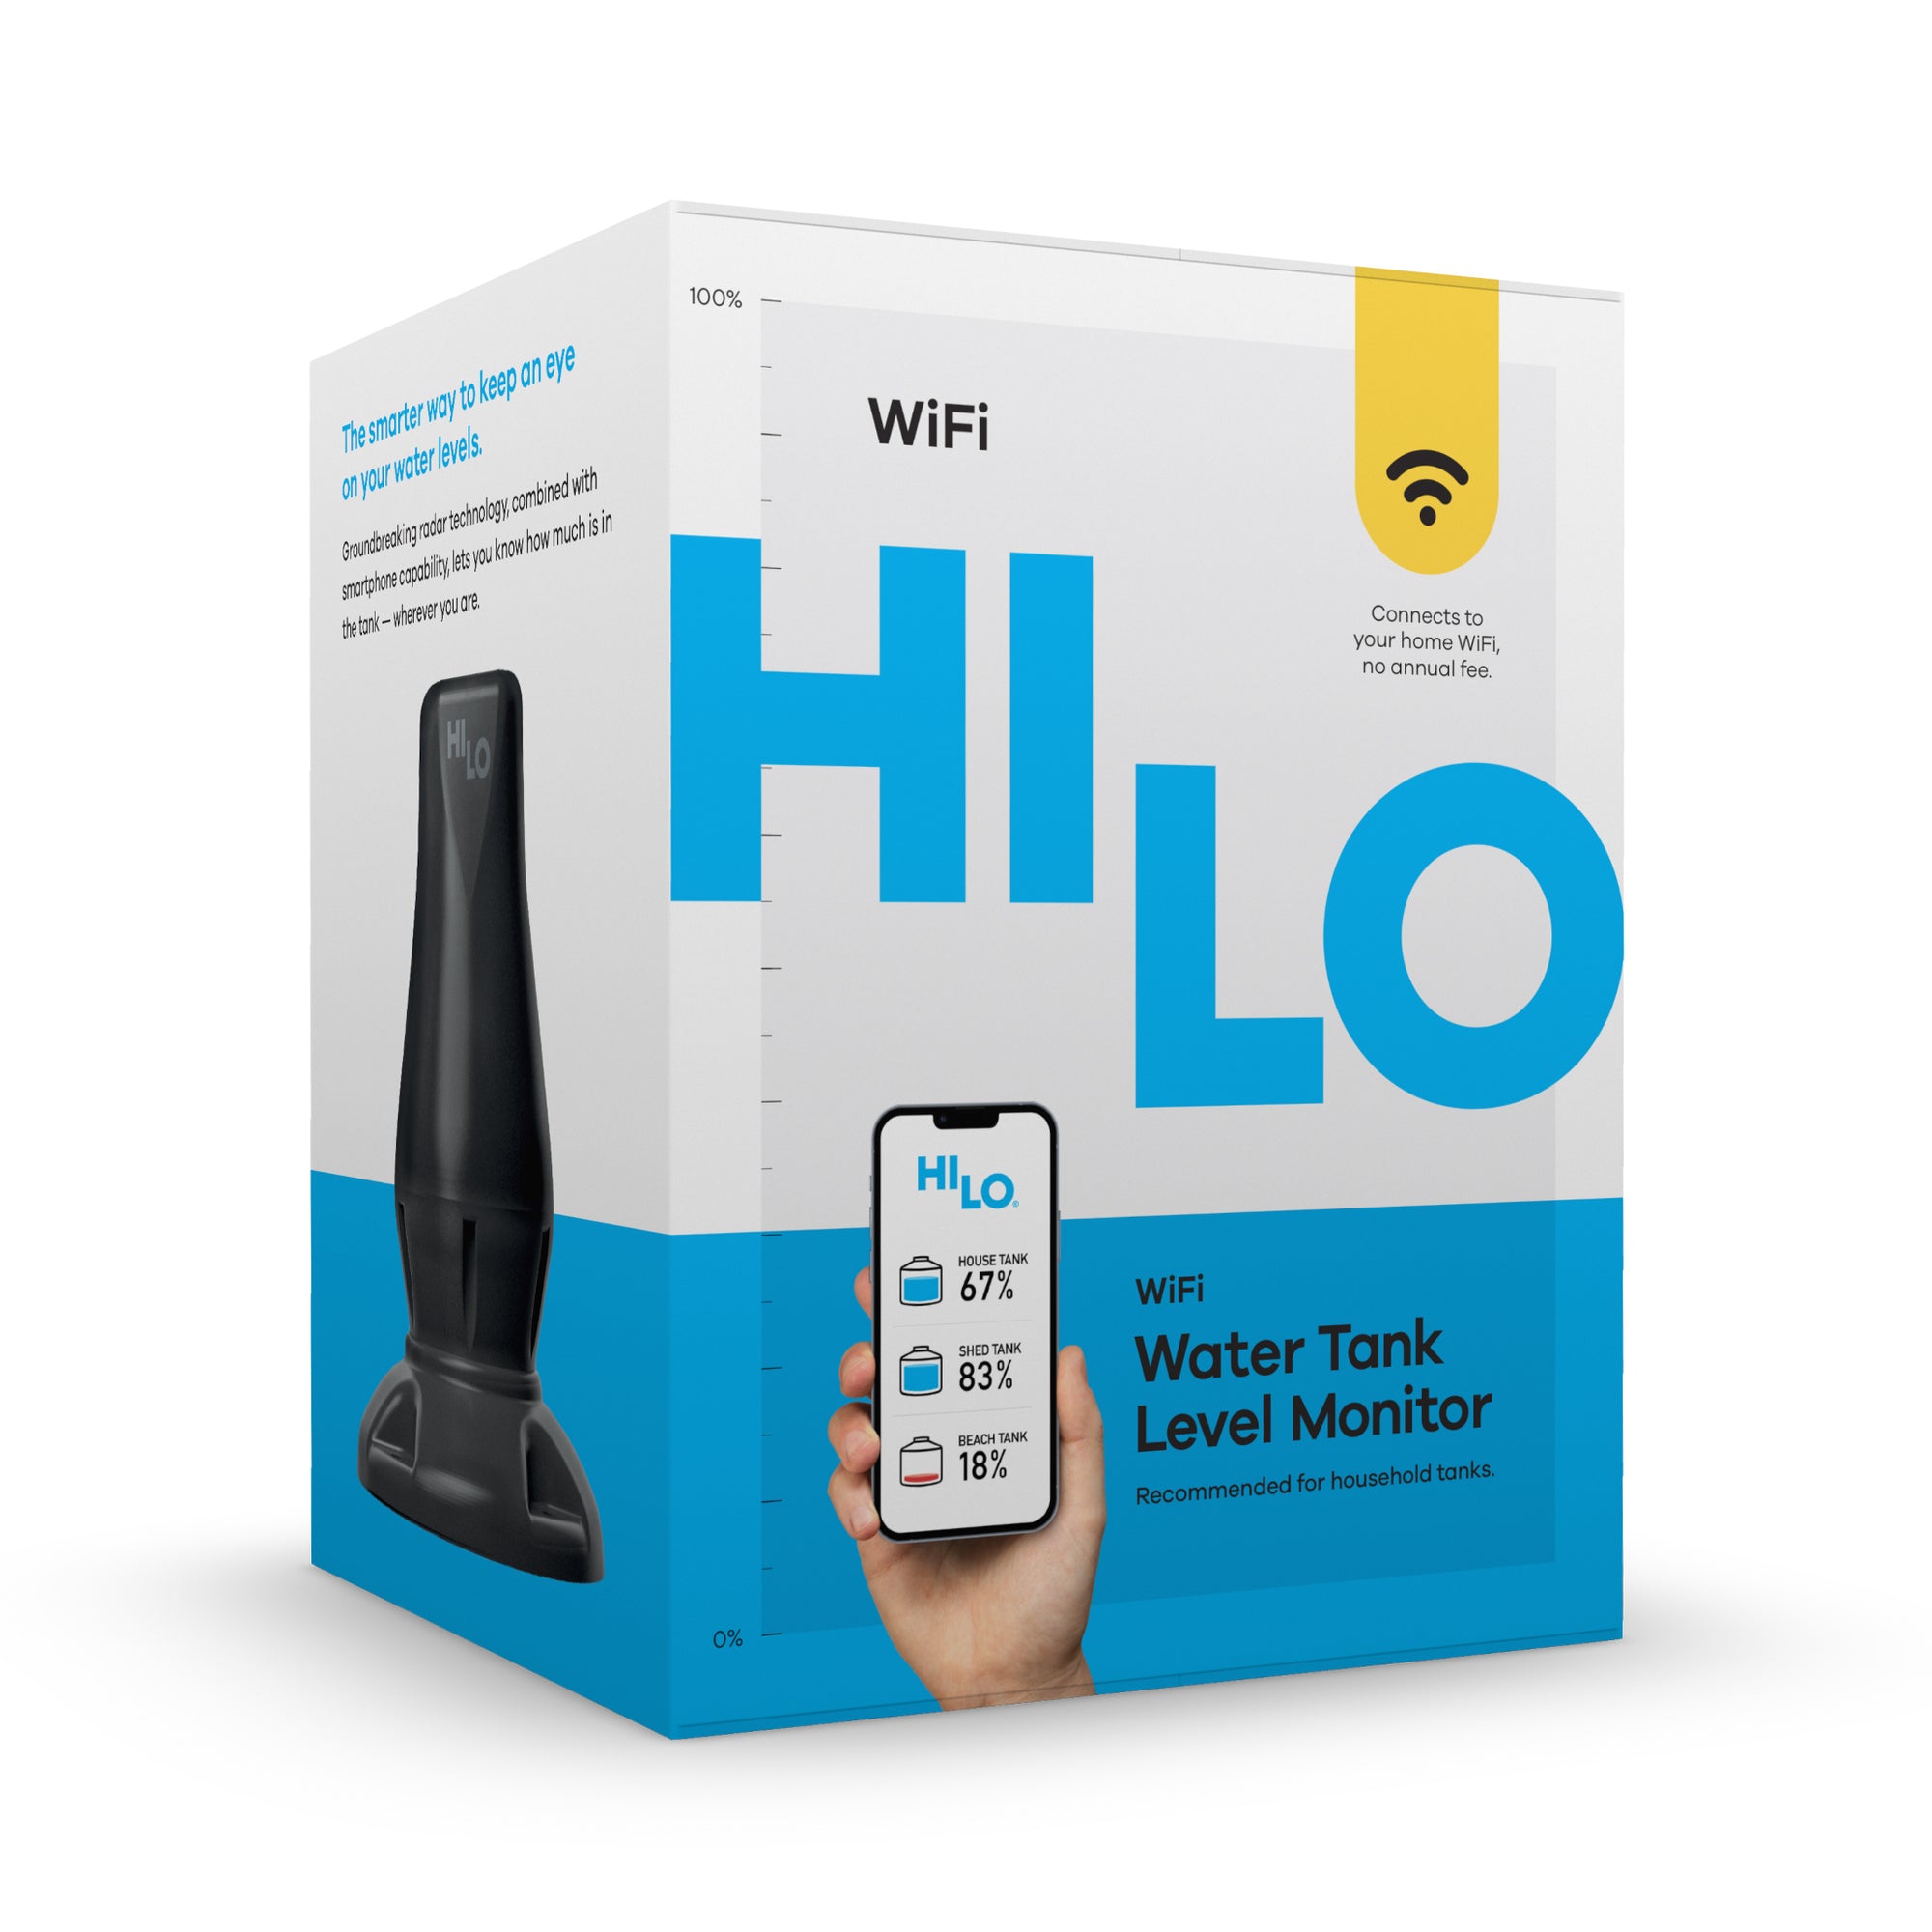 HiLo WiFi Tank Monitor (previously Waterwatch)